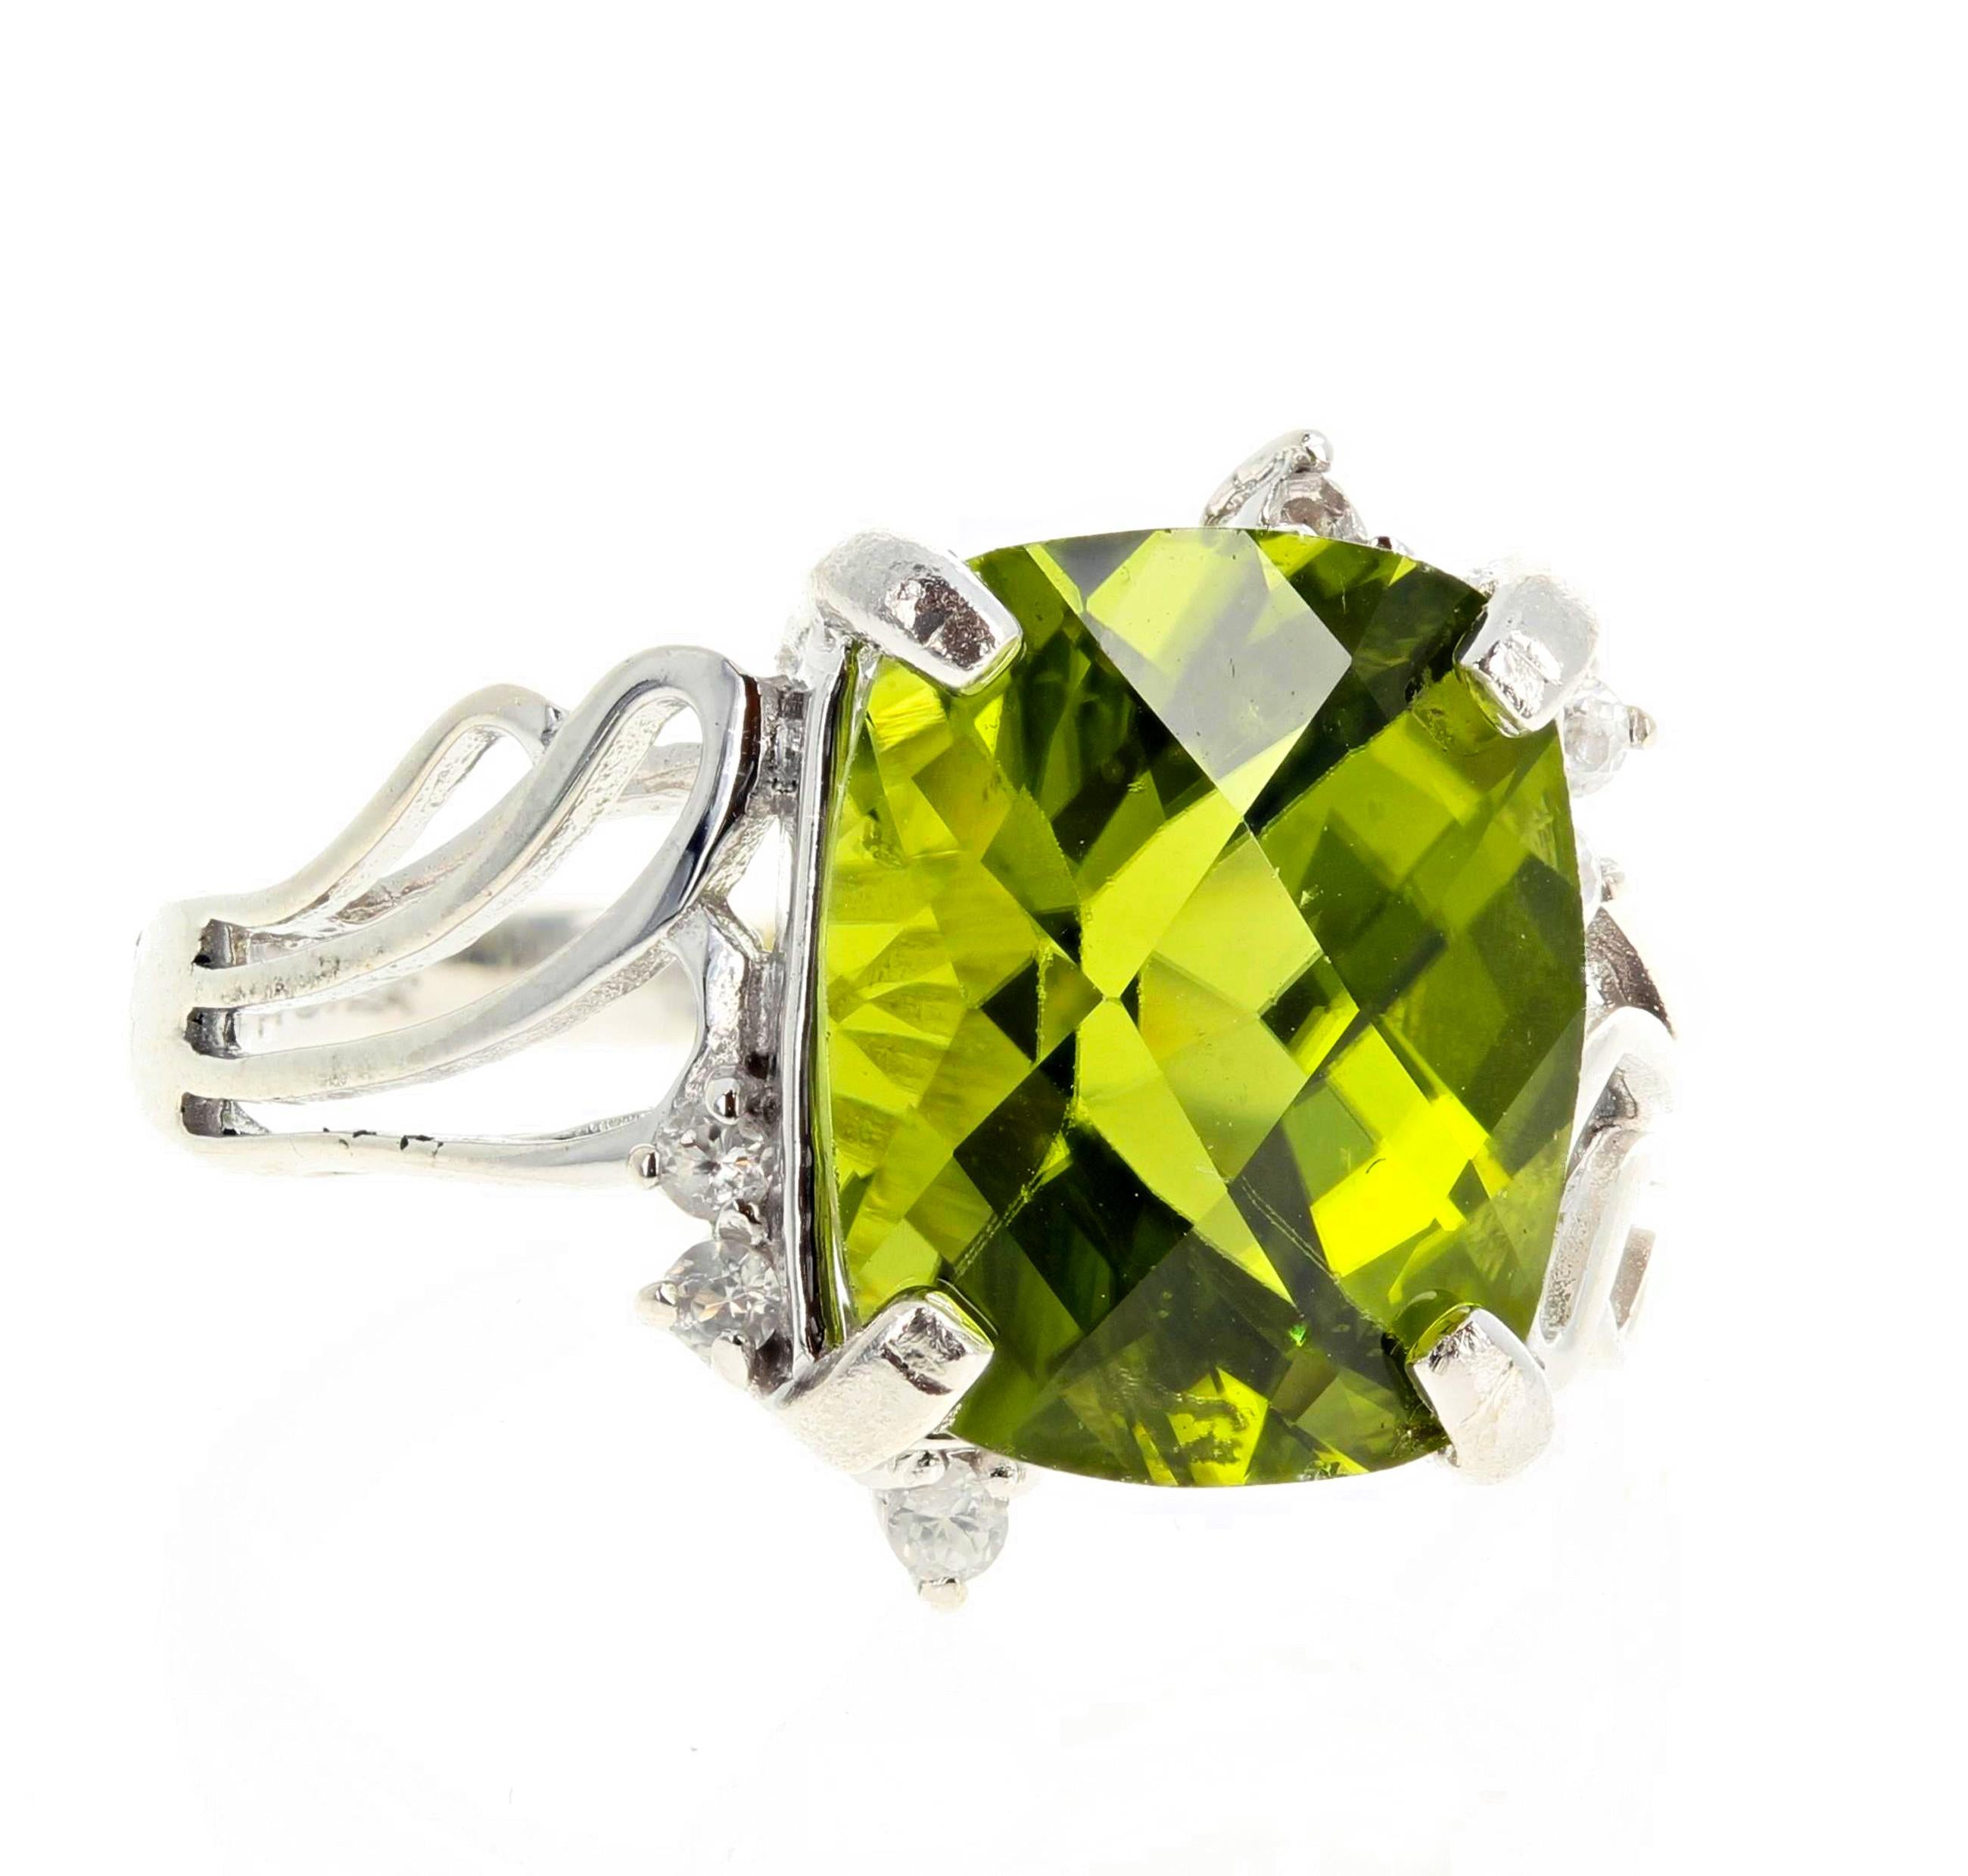 AJD Brilliant Rare Natural Green 7.8 Ct Sri Lanka Zircon & Diamond Ring In New Condition For Sale In Raleigh, NC